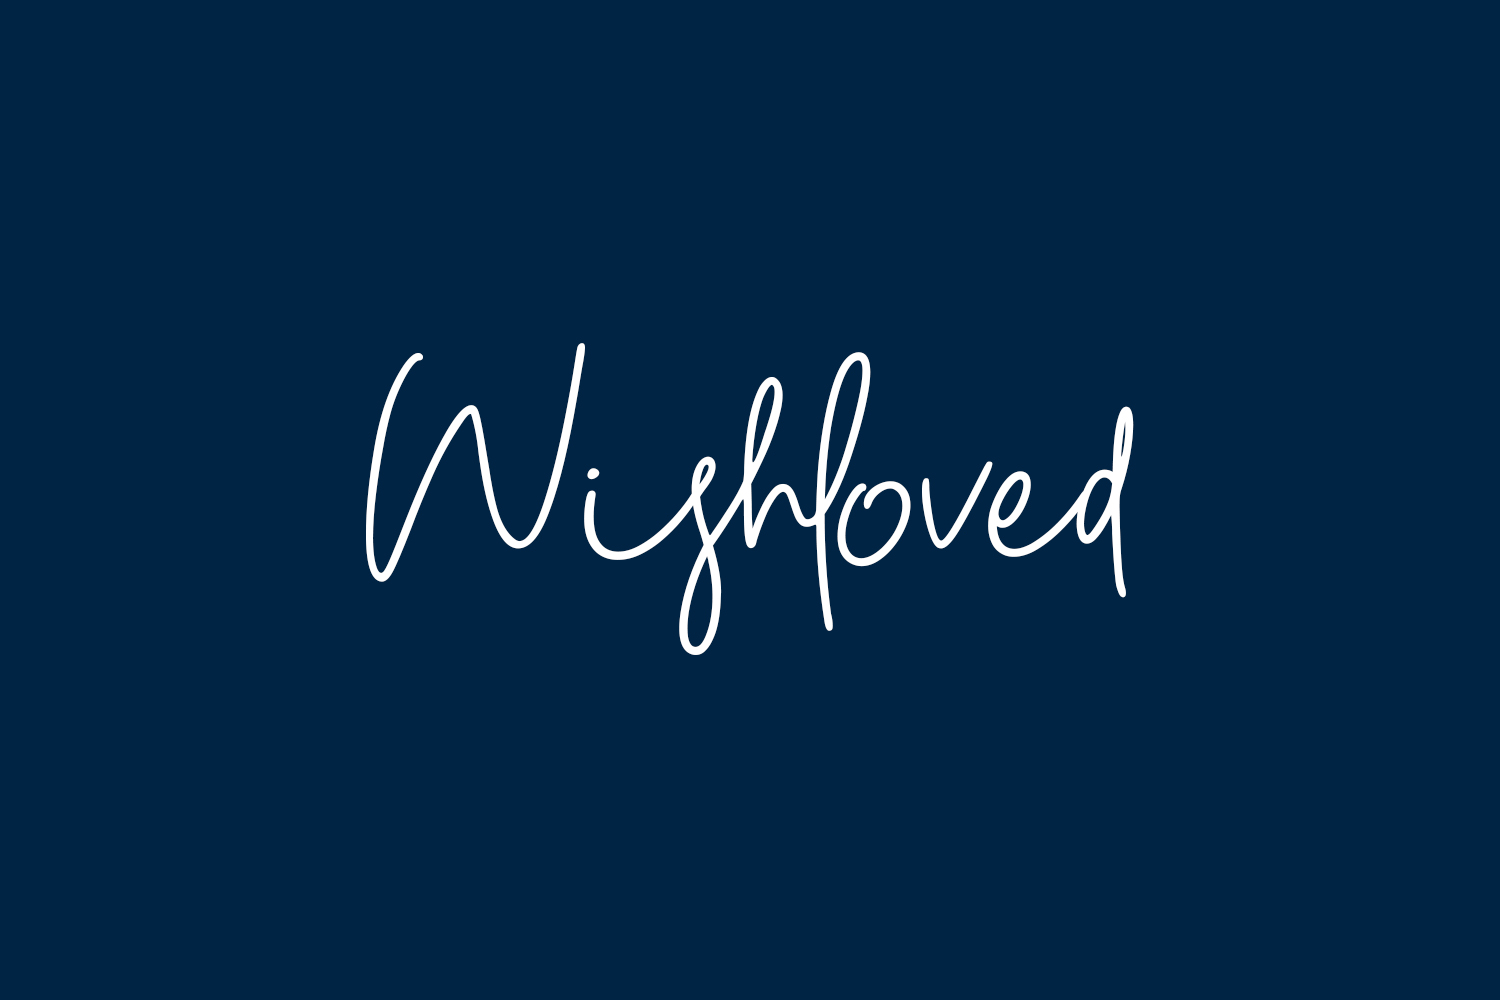 Wishloved Free Font